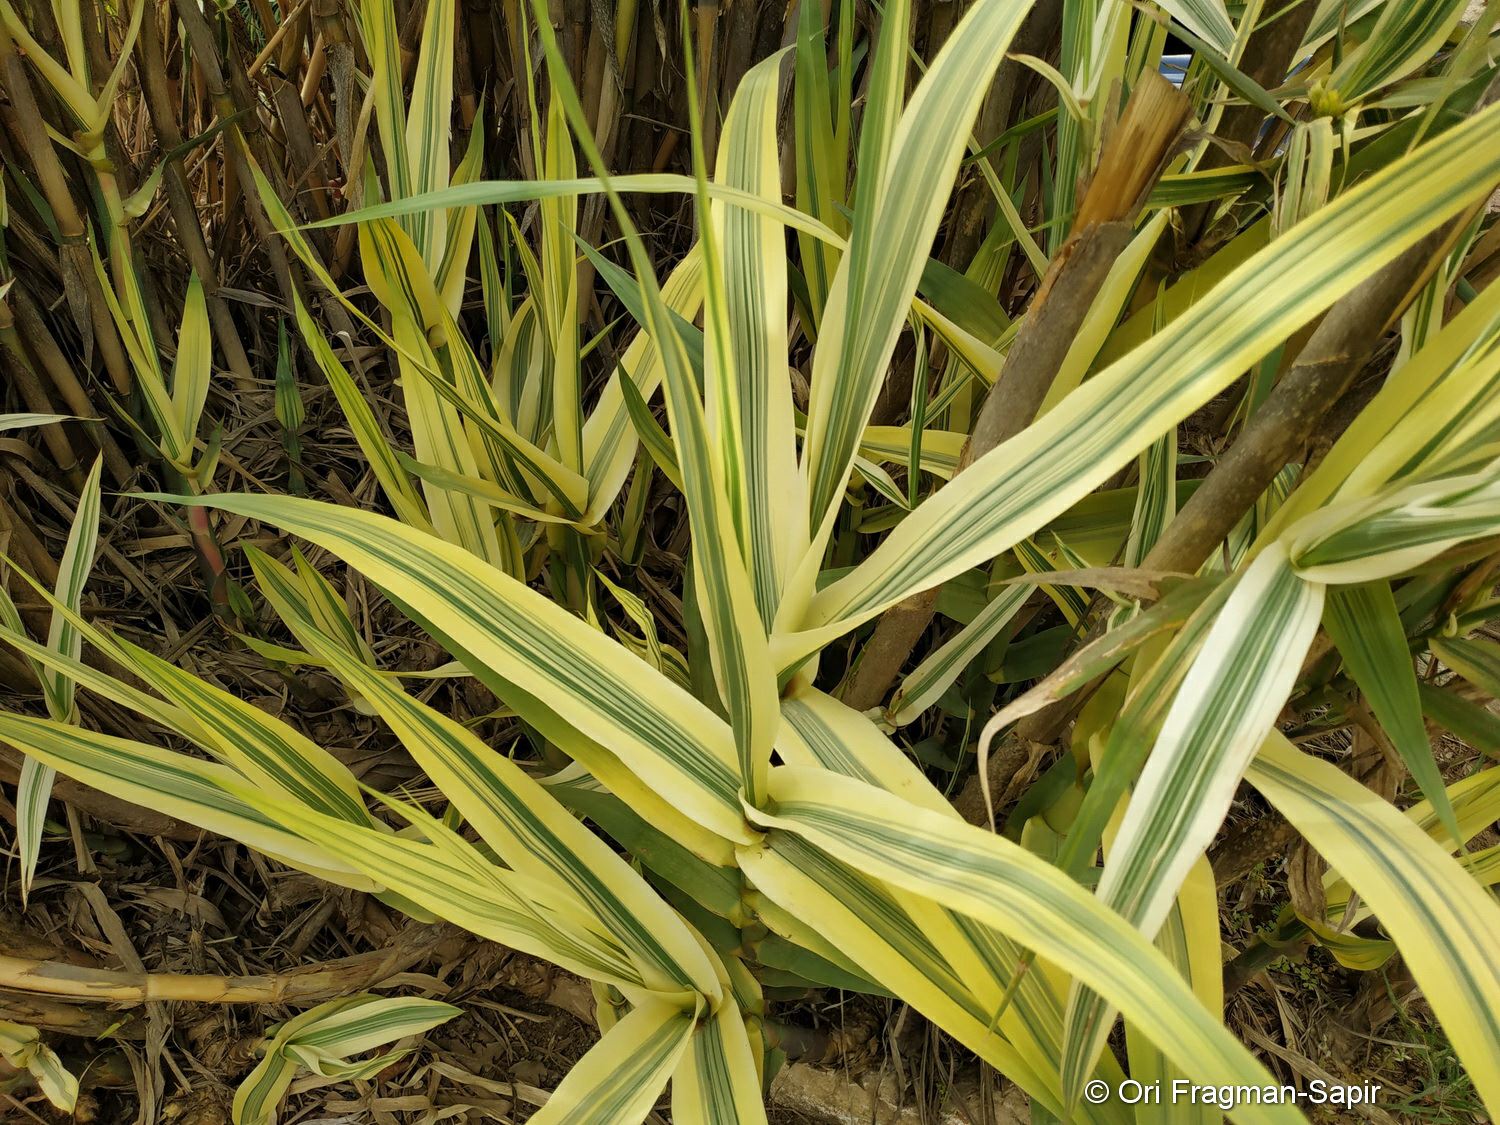 Arundo donax 'Versicolor' - Striped Giant Reed, Vairegated Giant Reed, עבקנה שכיח 'ססגוני', עבקנה שכיח 'רב-גוני'